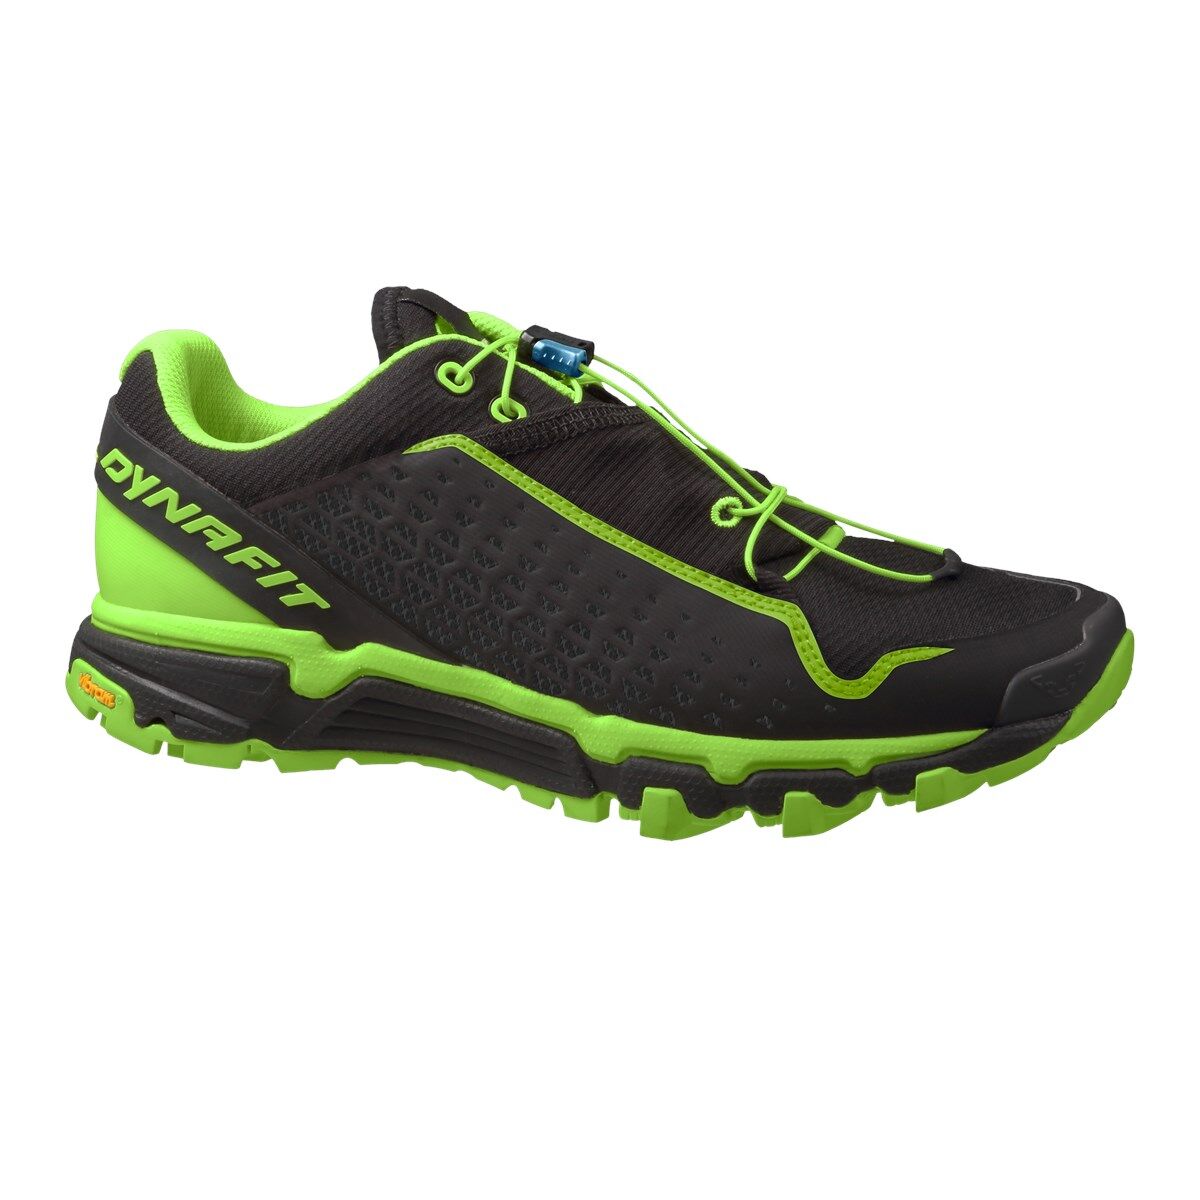 Dynafit - Ultra Pro M - Trail running shoes - Men's